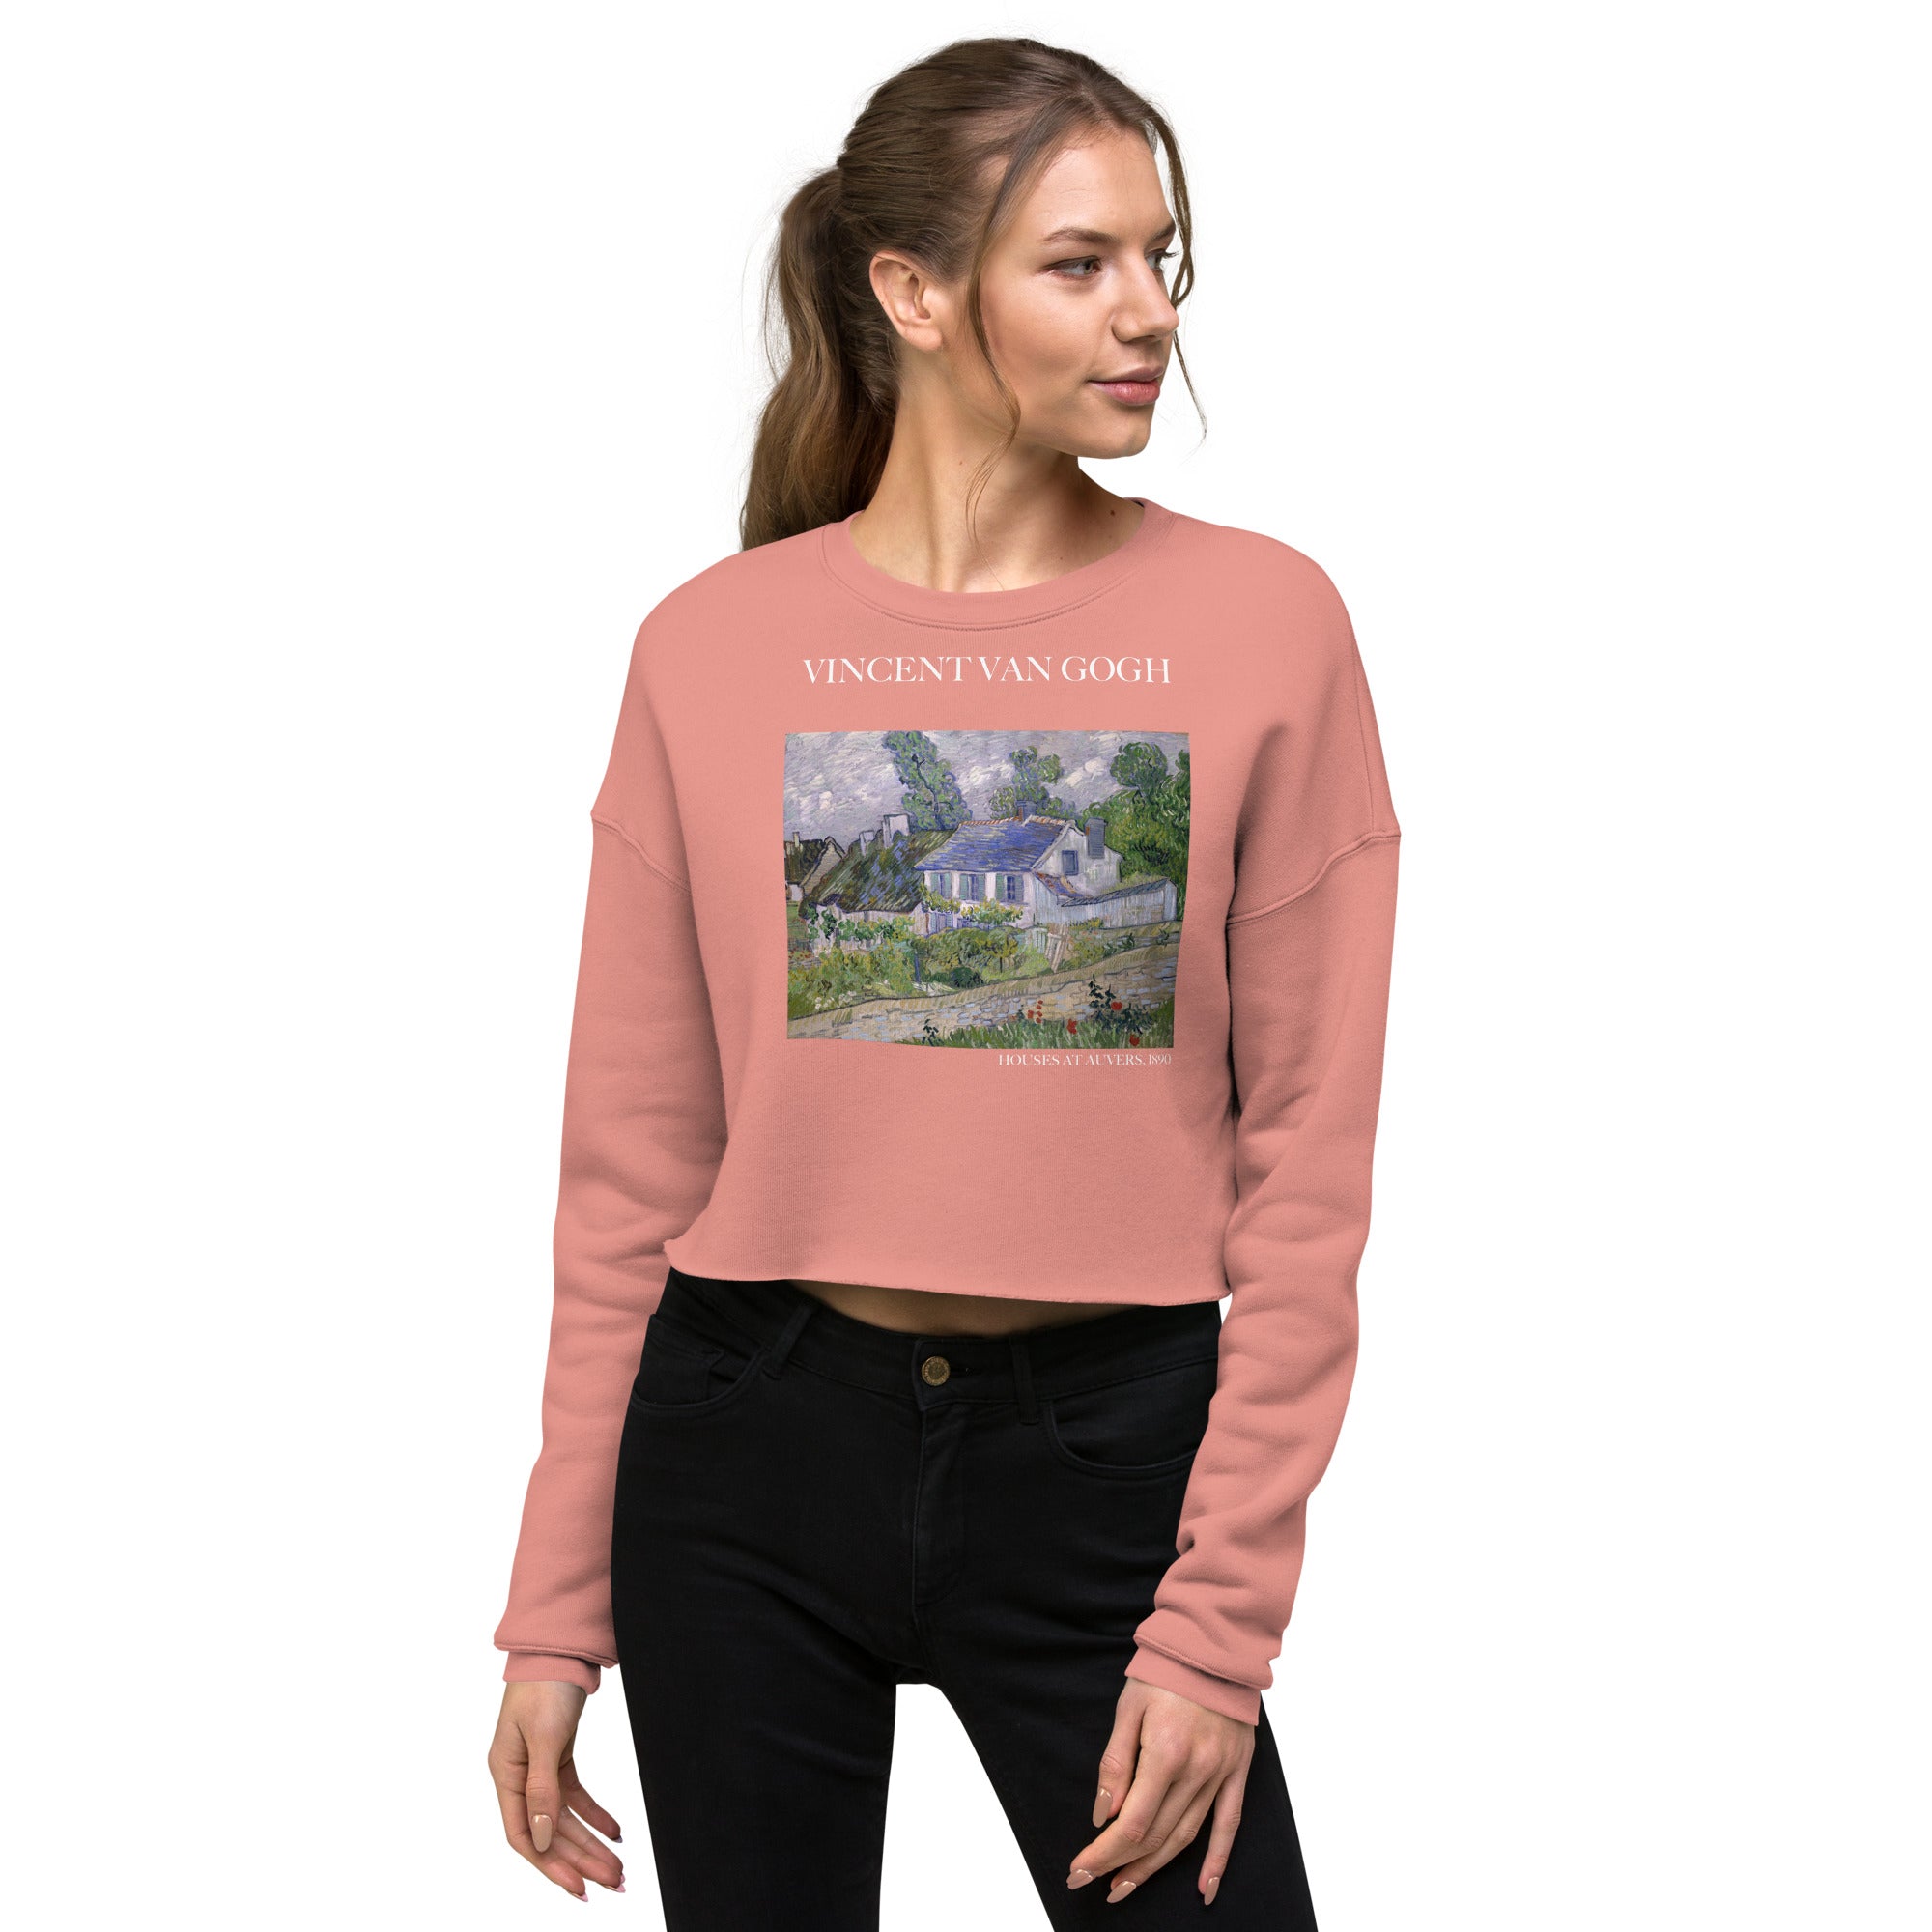 Vincent van Gogh 'Houses at Auvers' Famous Painting Cropped Sweatshirt | Premium Art Cropped Sweatshirt